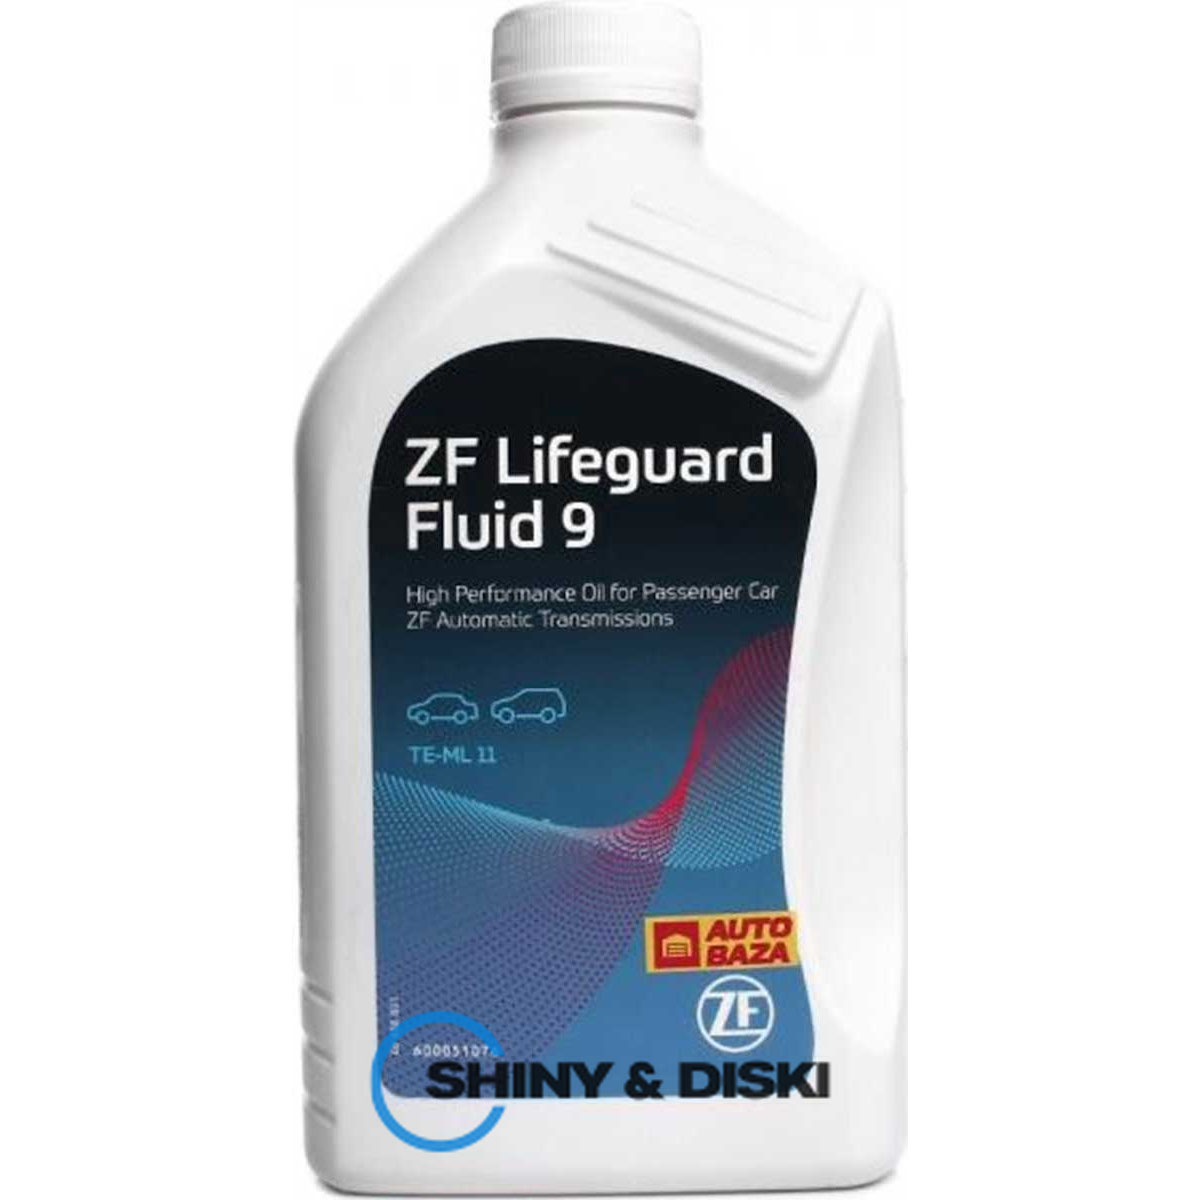 zf lifeguardfluid 9